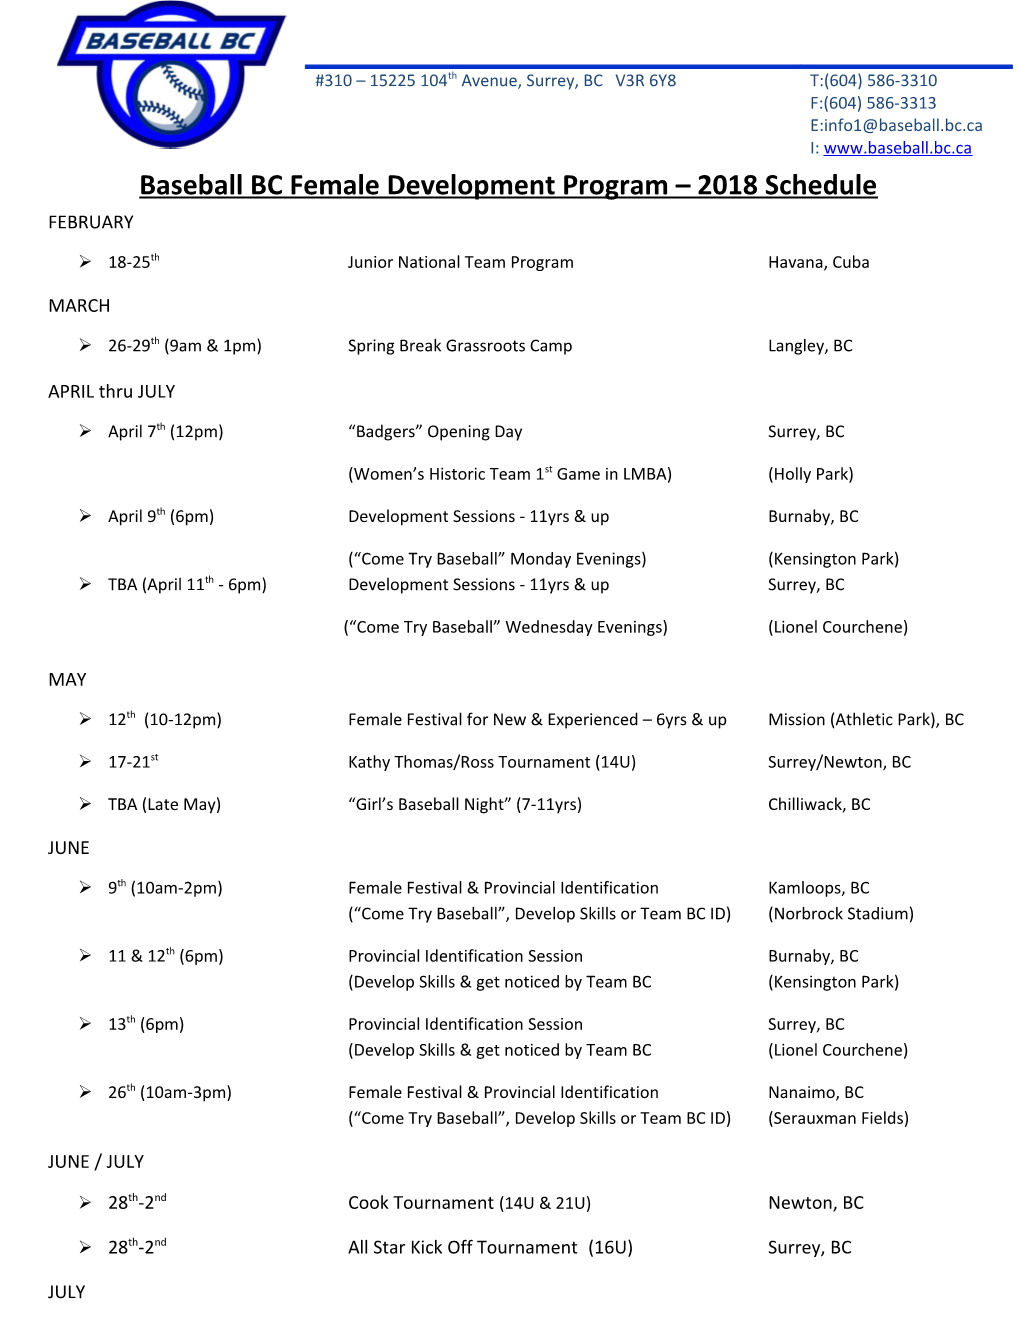 Baseball BC Female Development Program 2018Schedule